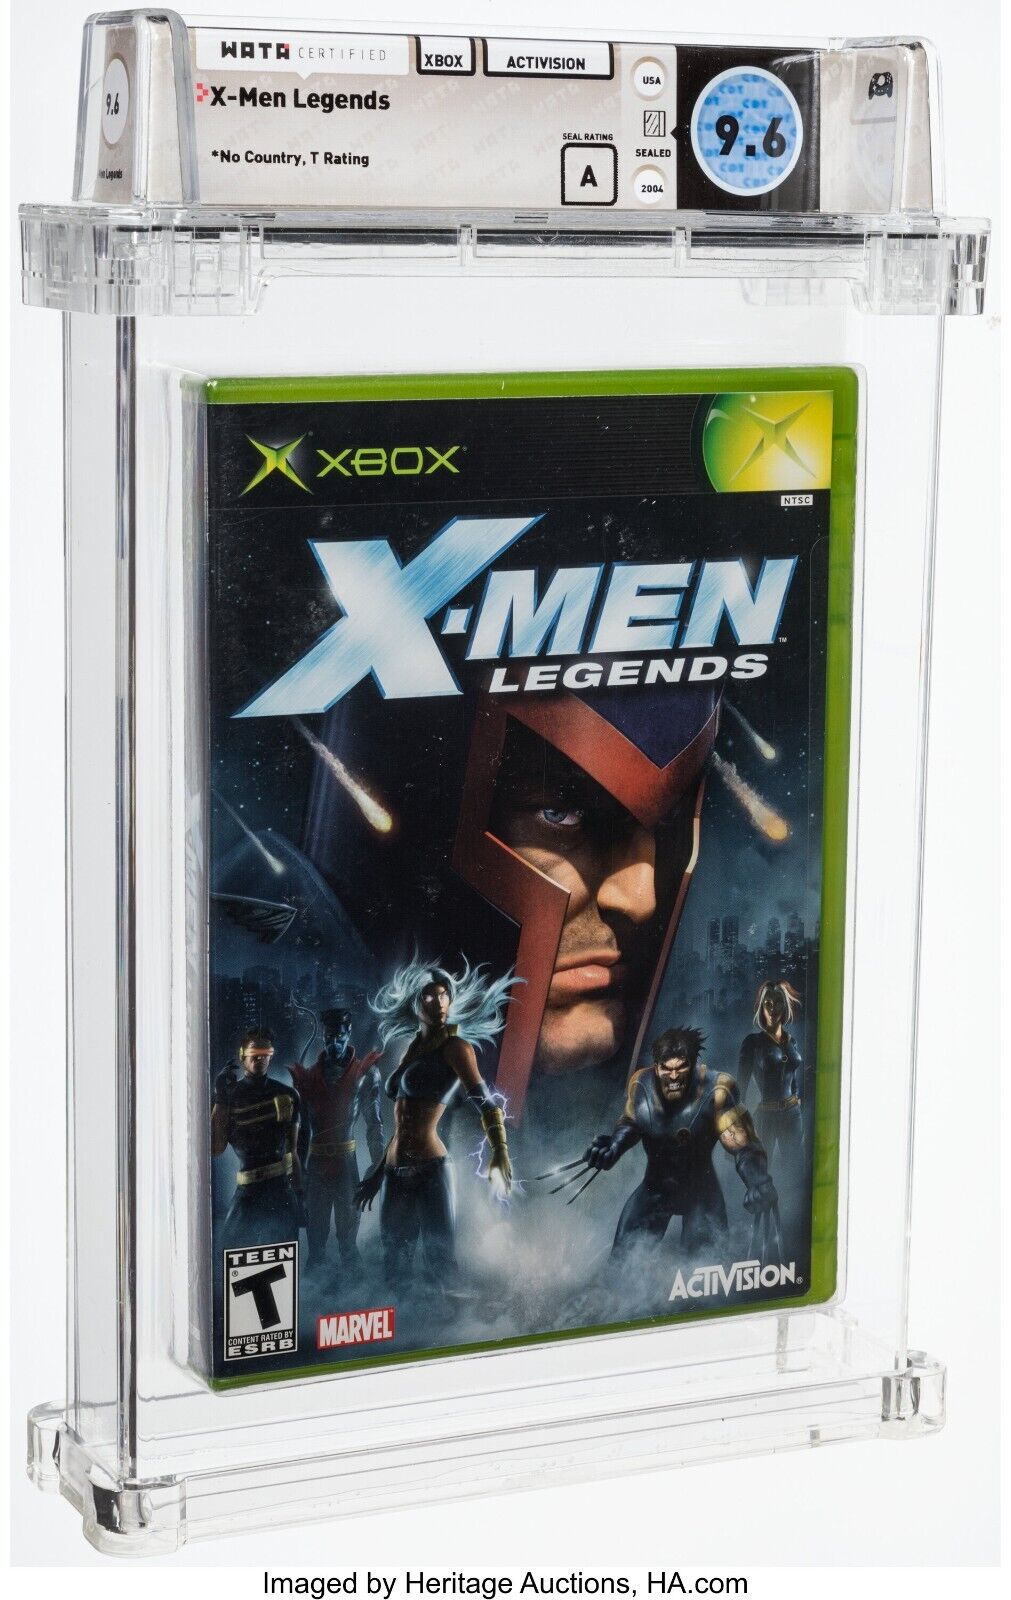 X-Men Legends (Microsoft Xbox, 2004) Sealed First Production WATA 9.6!